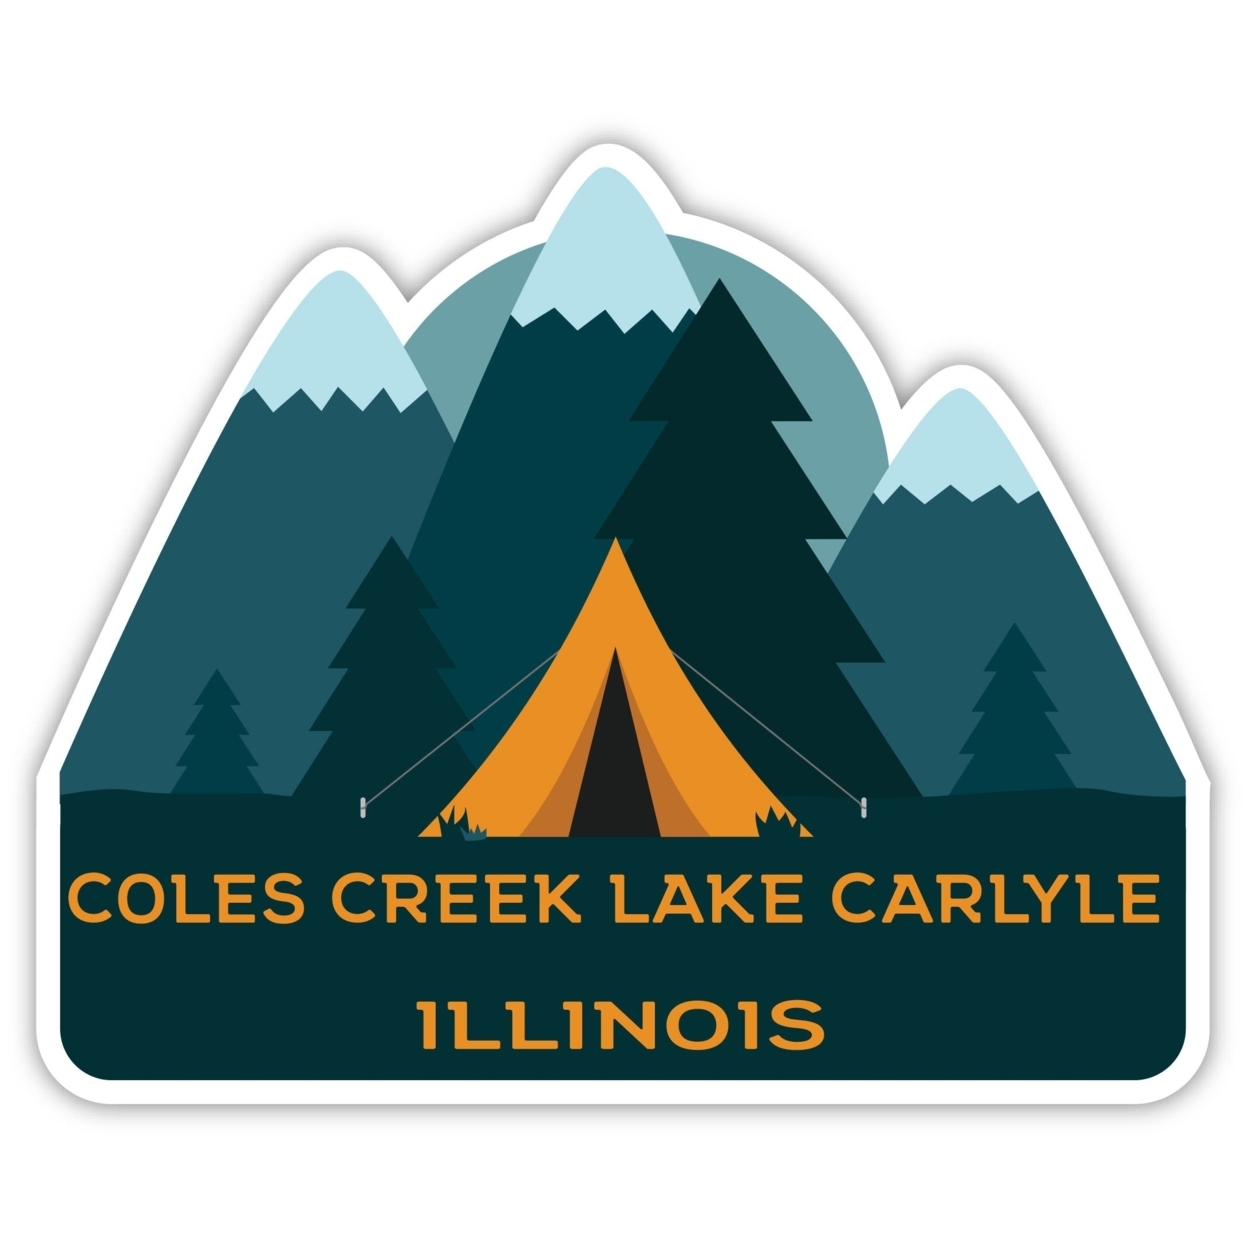 Coles Creek Lake Carlyle Illinois Souvenir Decorative Stickers (Choose Theme And Size) - Single Unit, 2-Inch, Tent